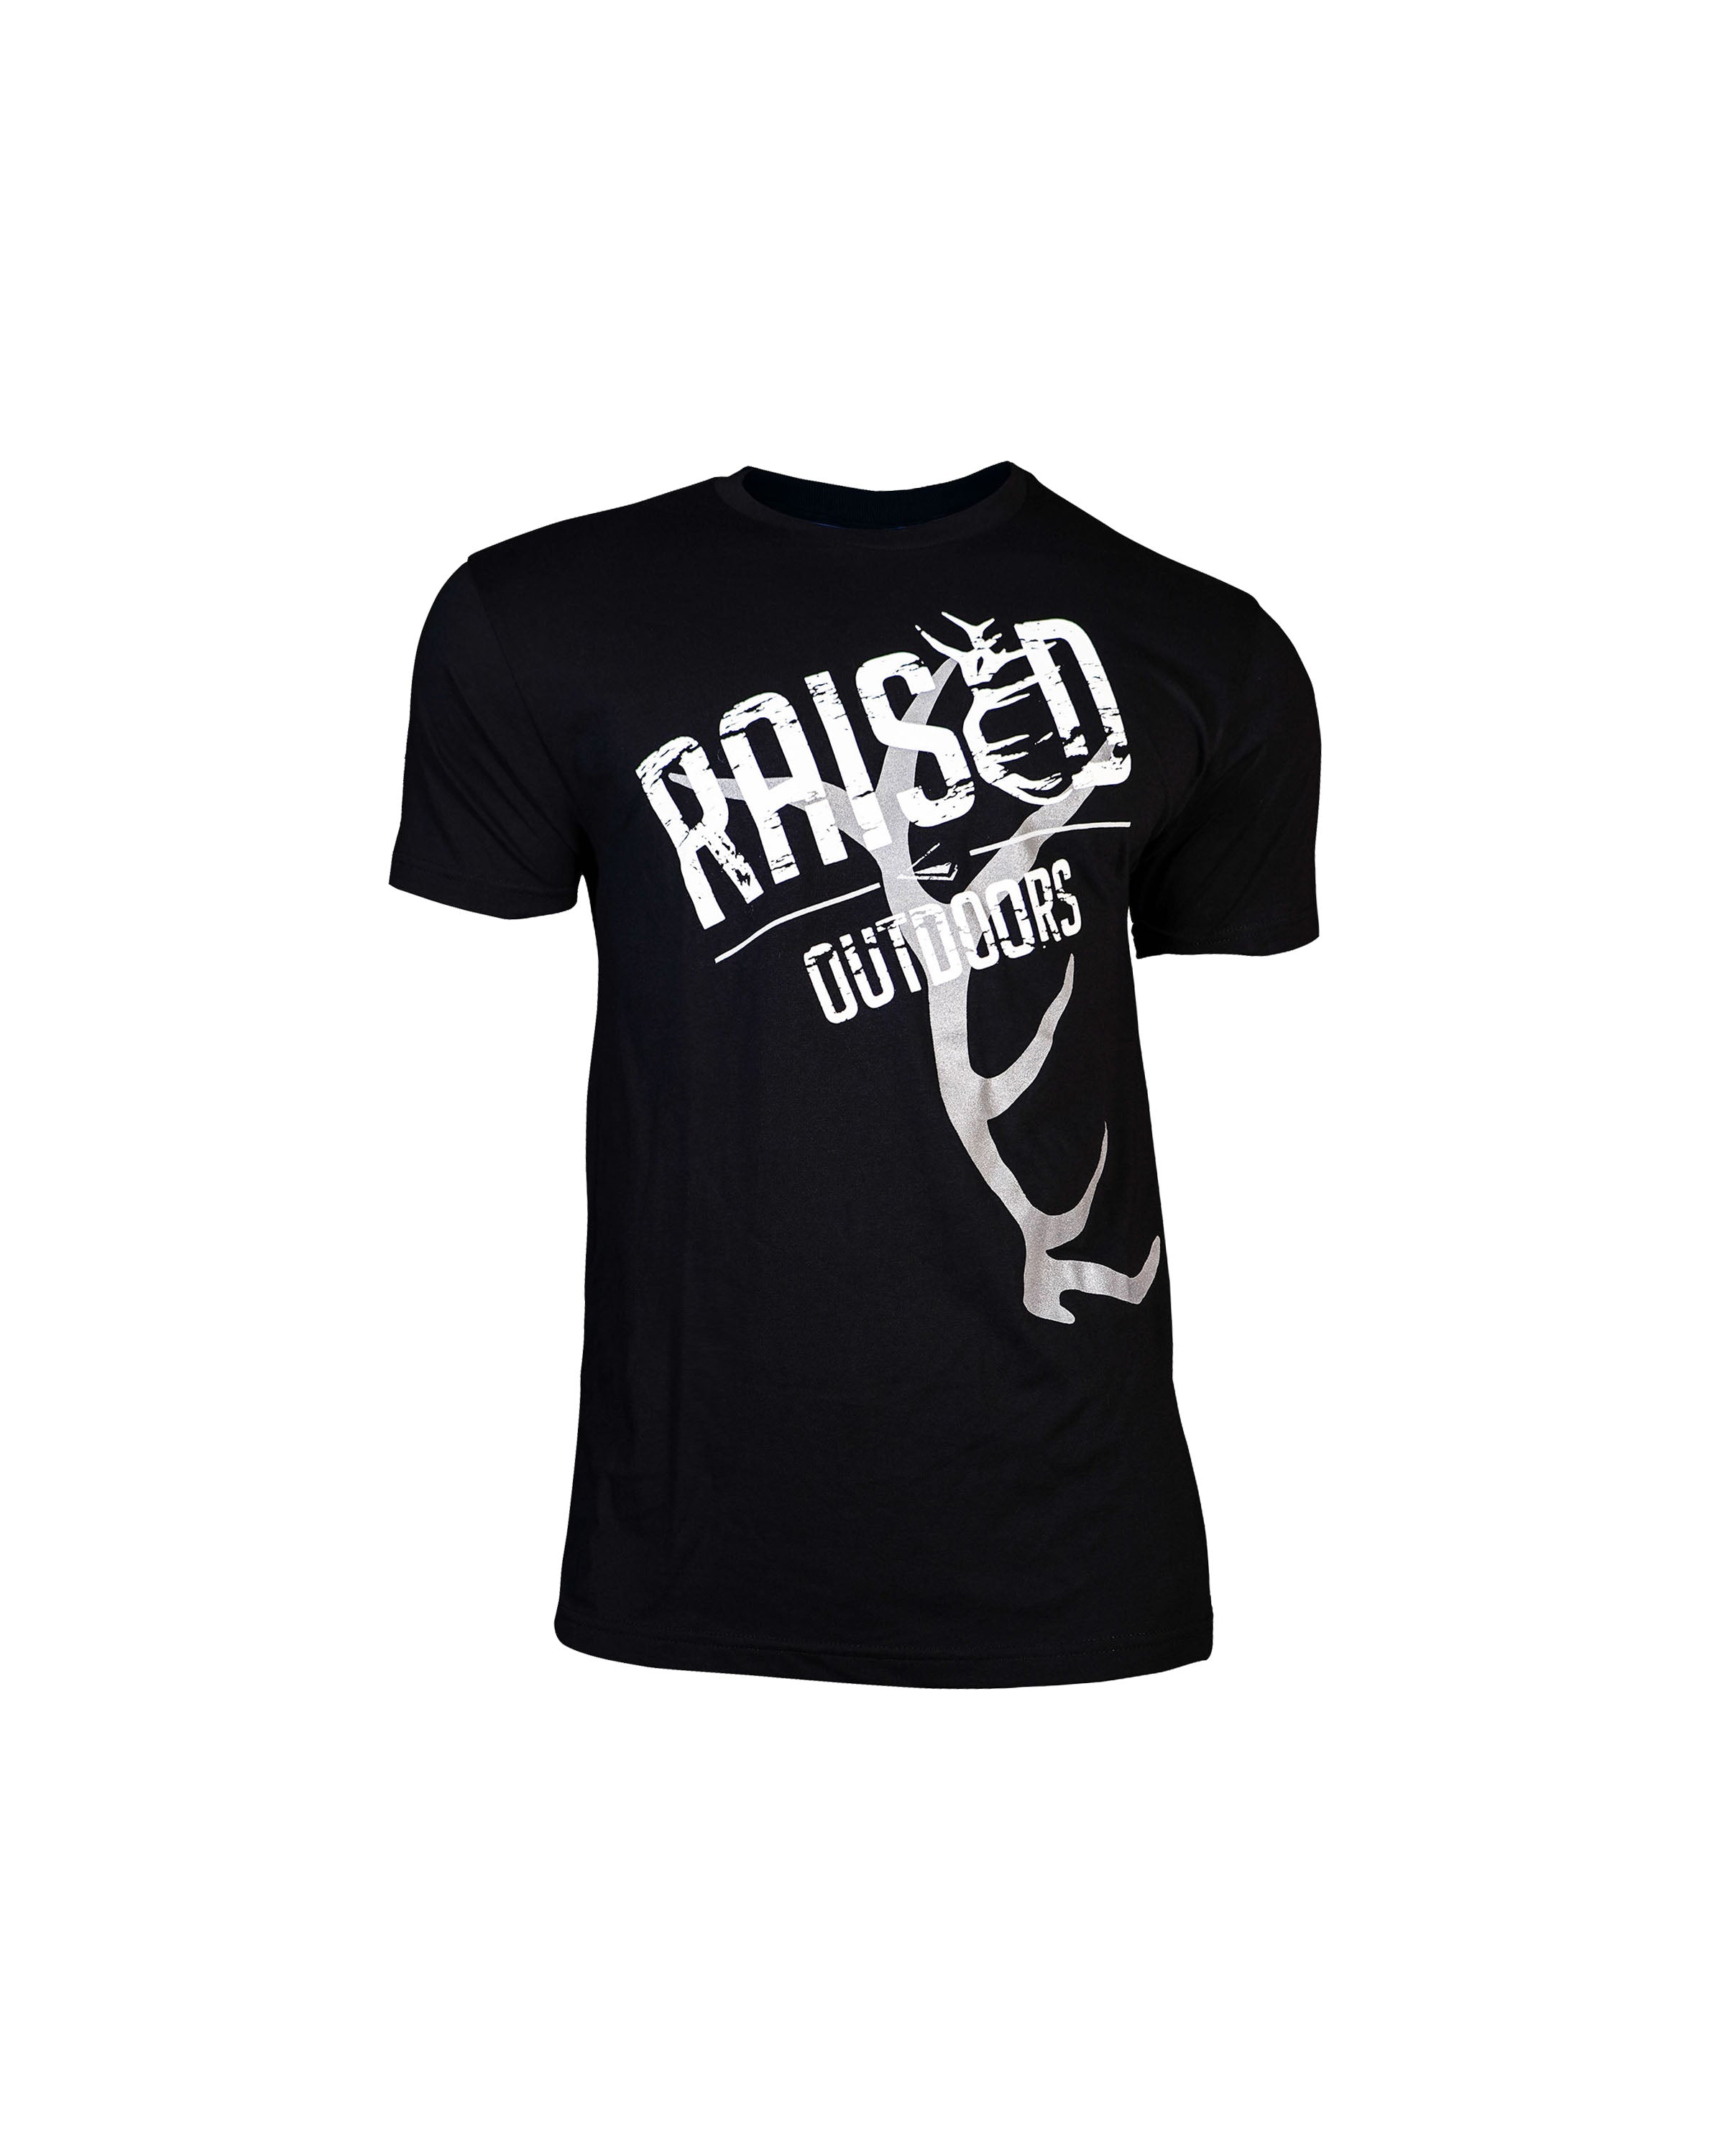 Black Raised Outdoors T-shirt